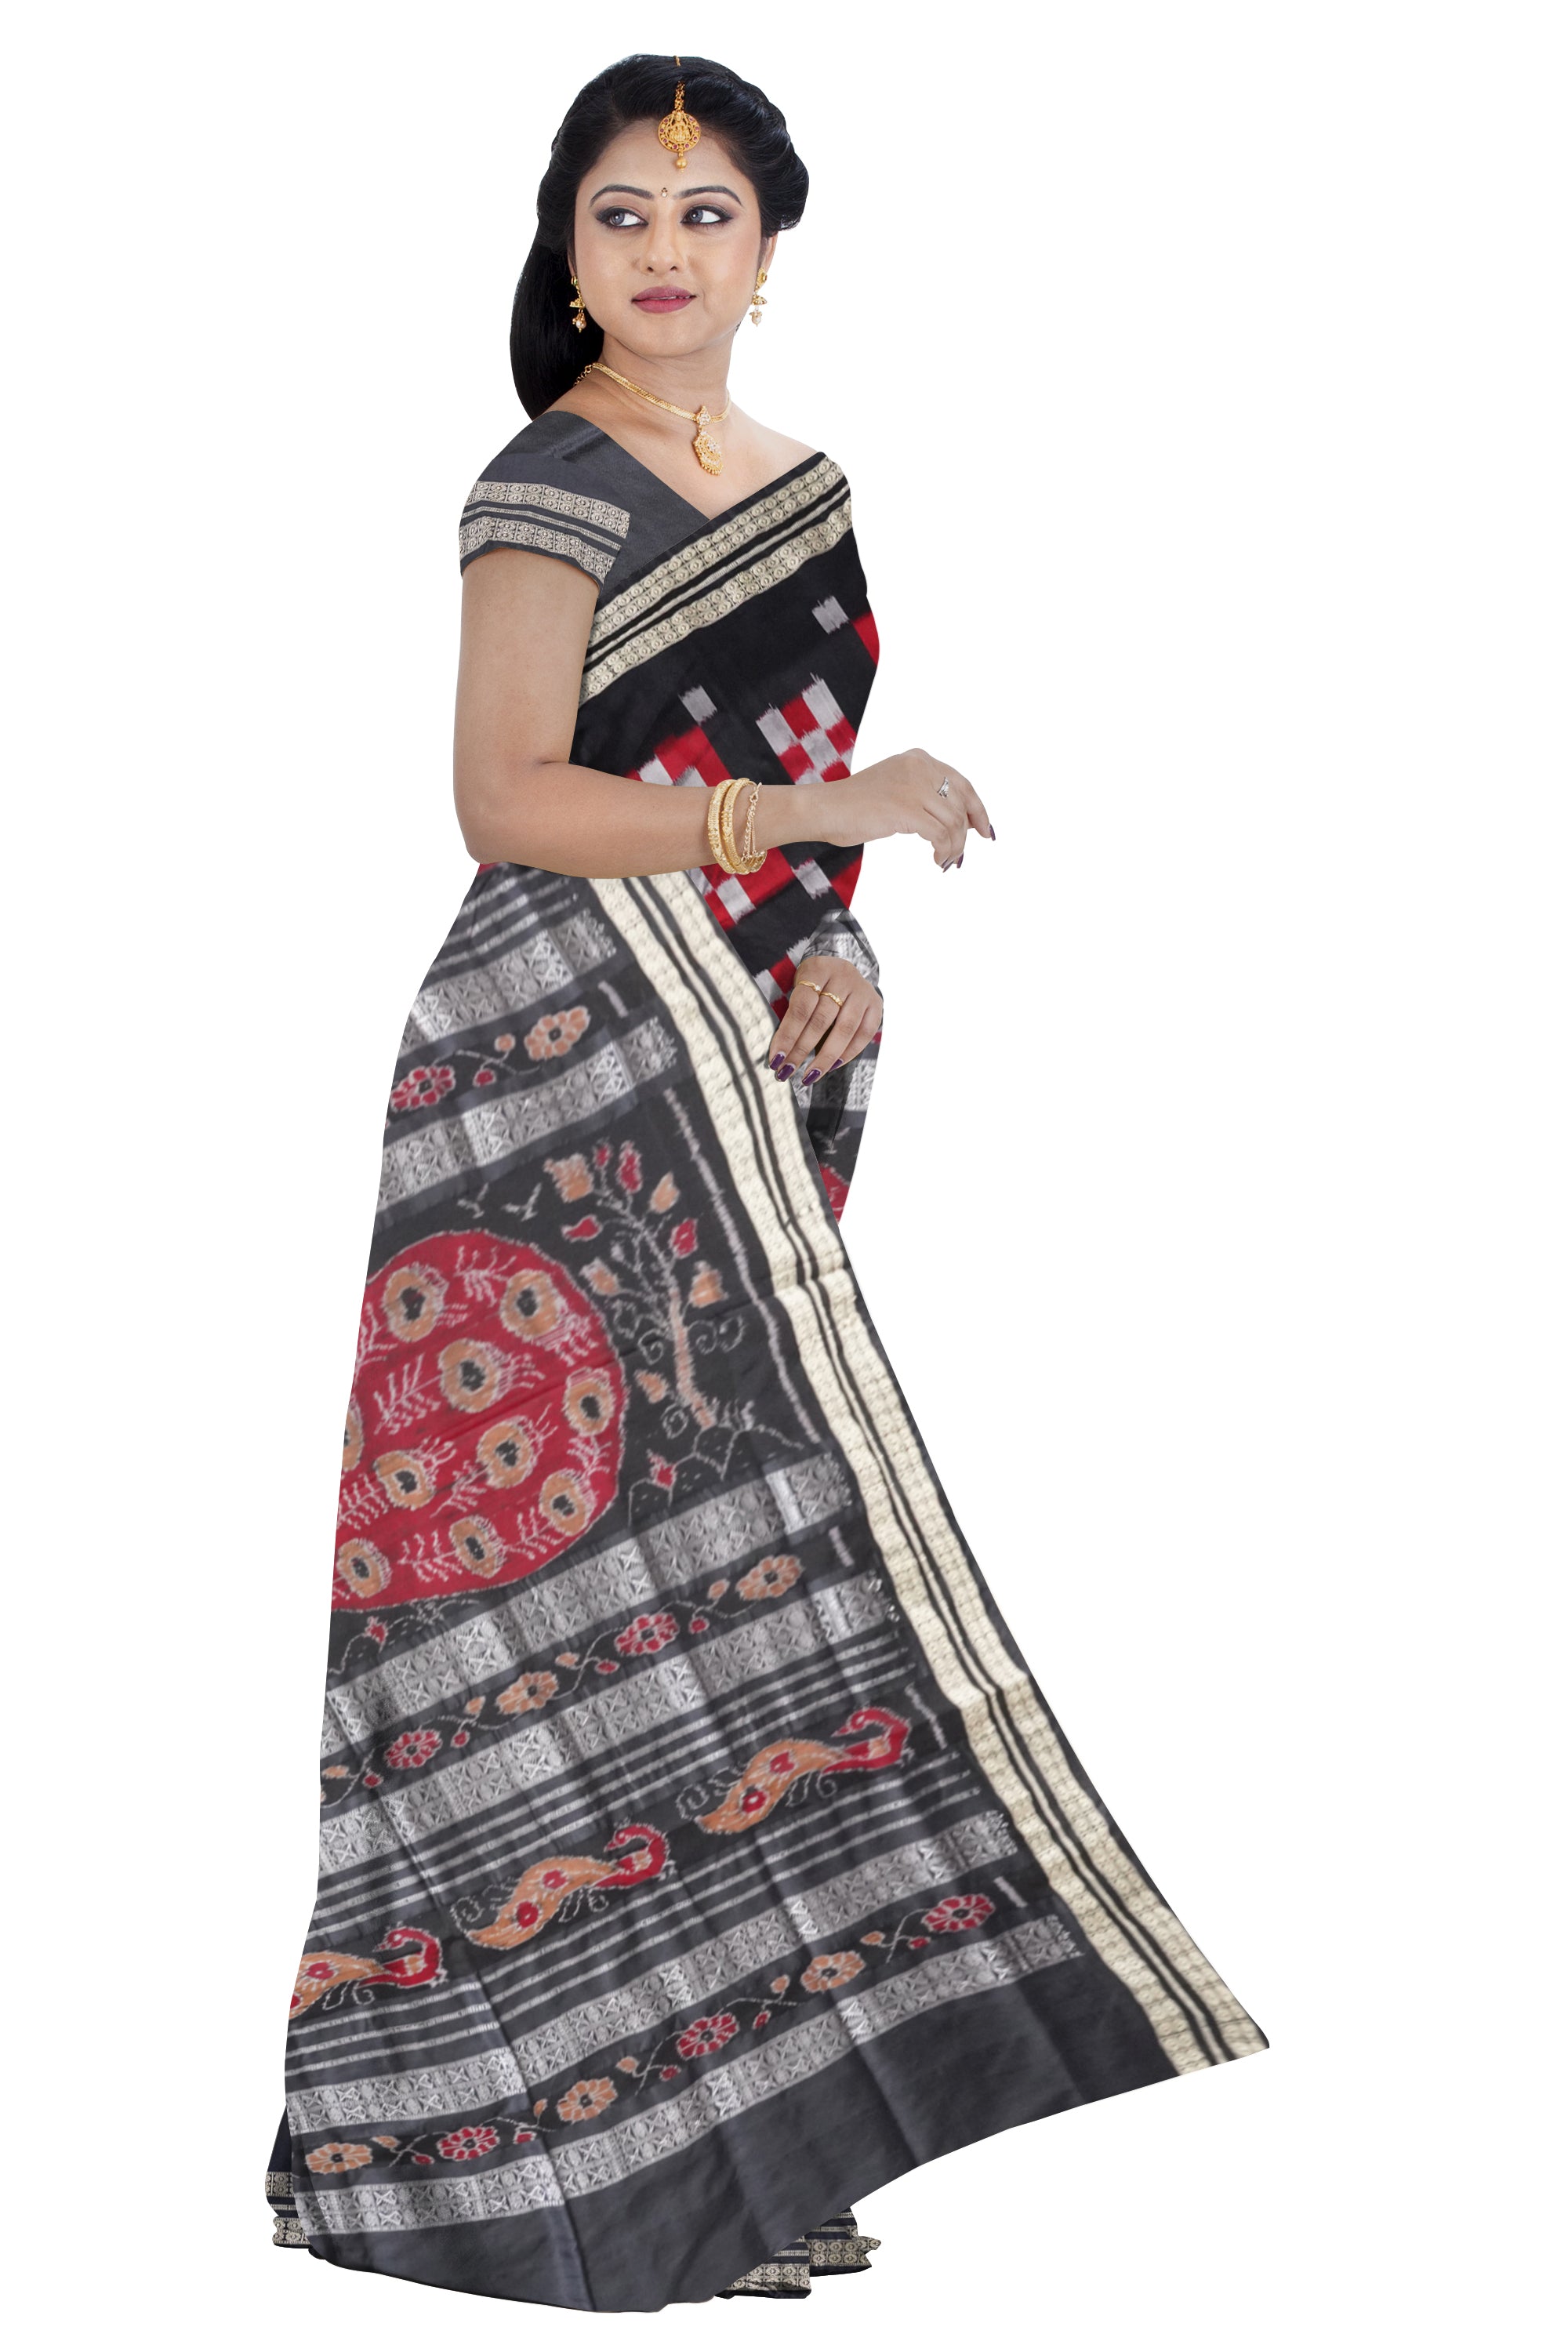 Pasapali pattern pata saree, big peacock pallu, versatile for all occasions. - Koshali Arts & Crafts Enterprise